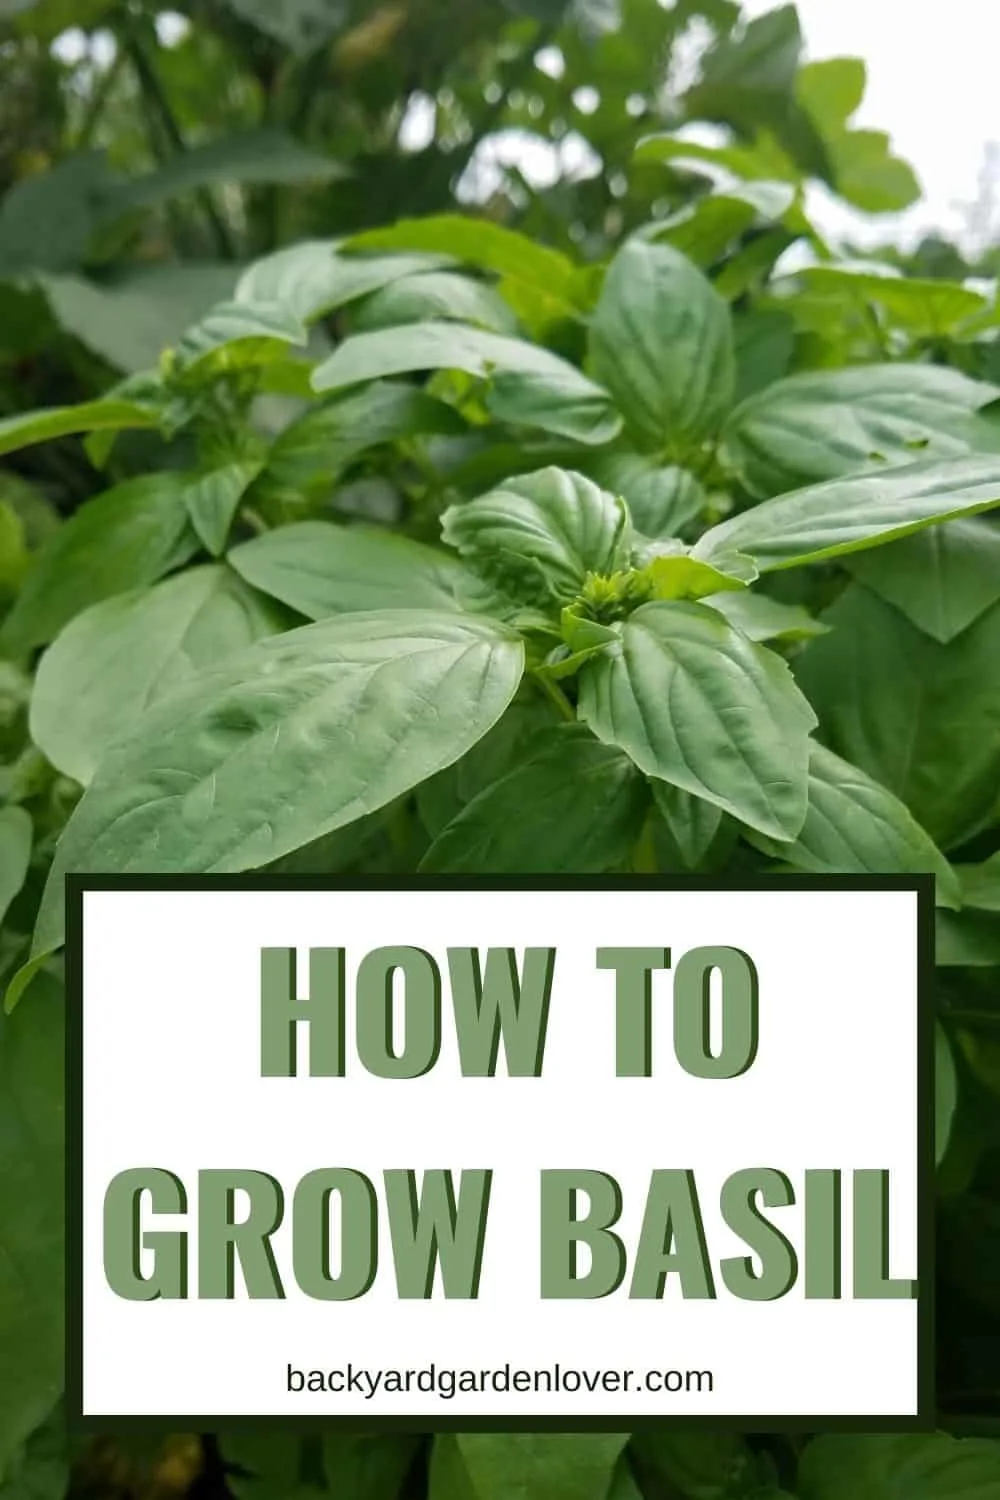 How to grow basil - Pinterest image